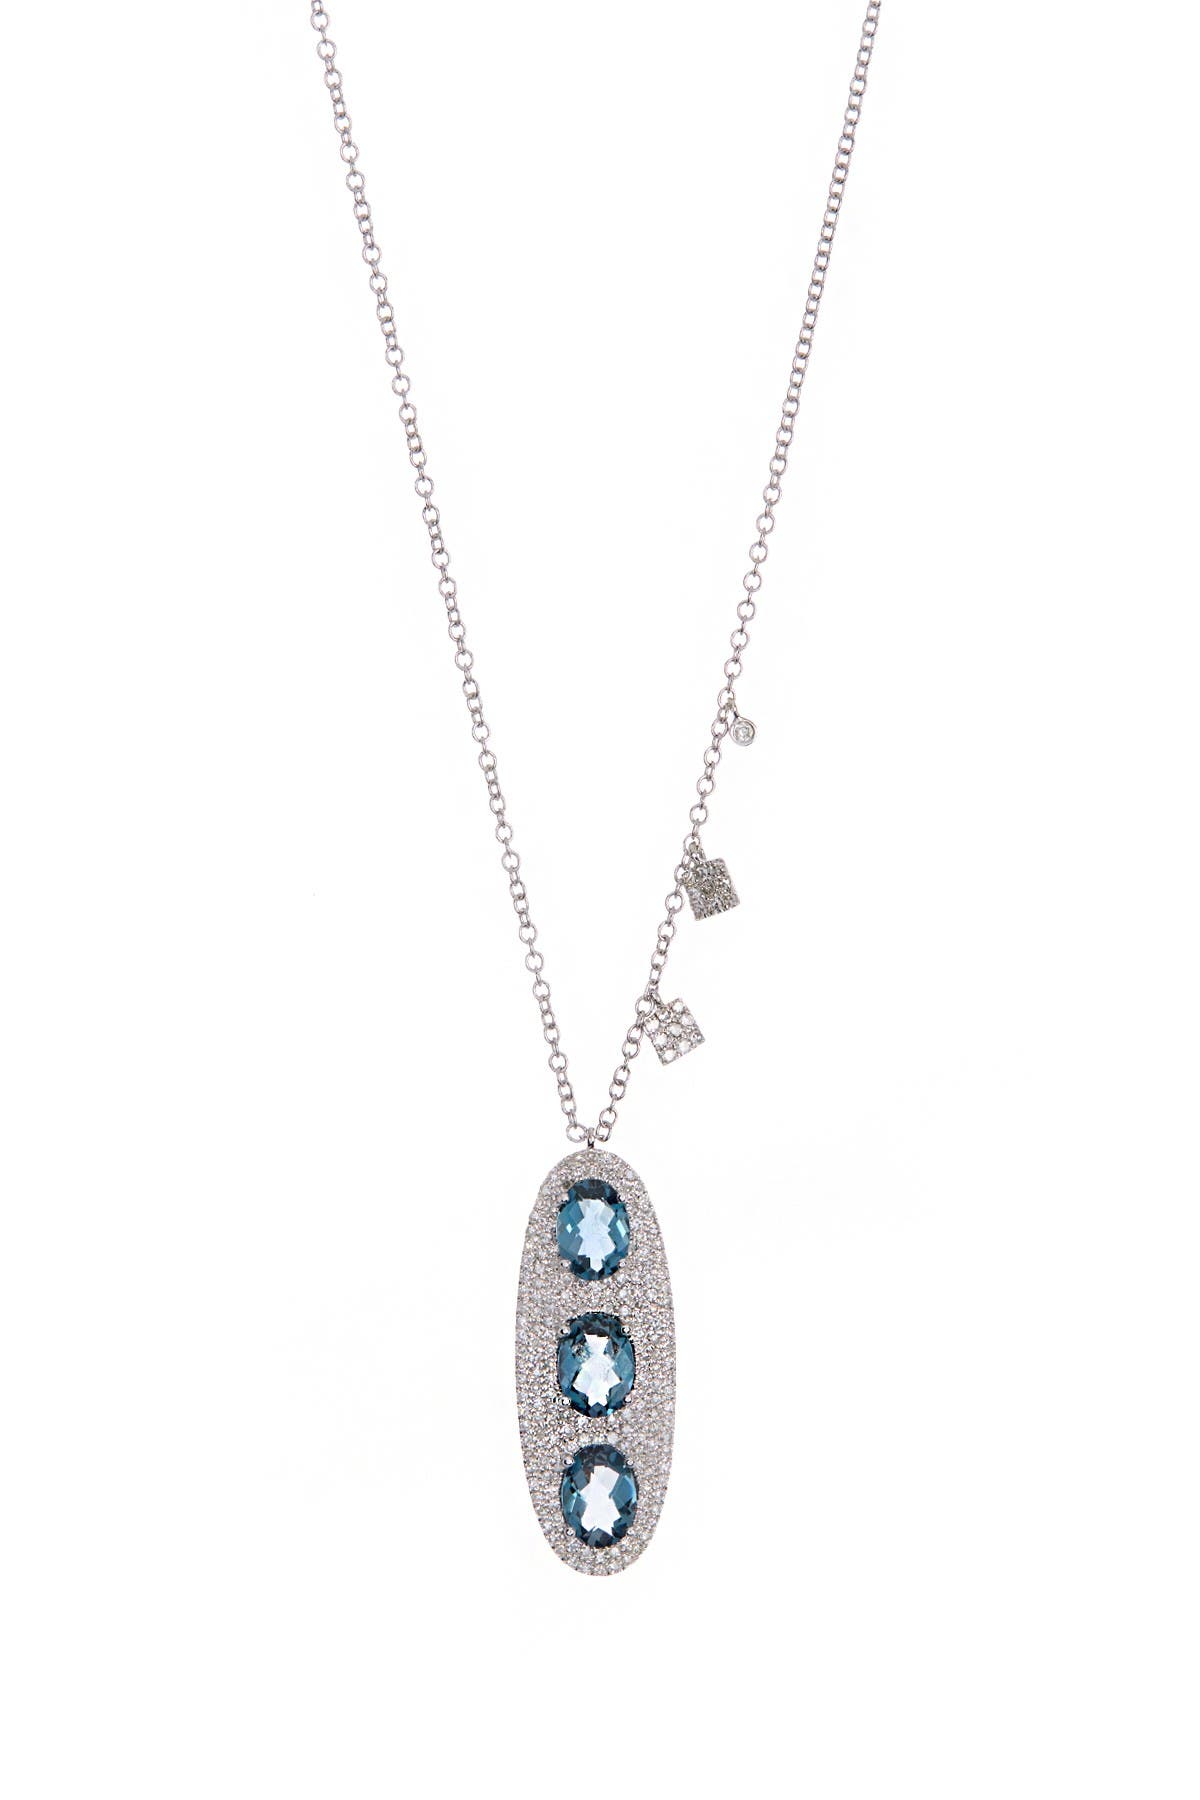 Meira T 14k White Gold Triple Blue Topaz & Pave Diamond Oval Pendant Necklace